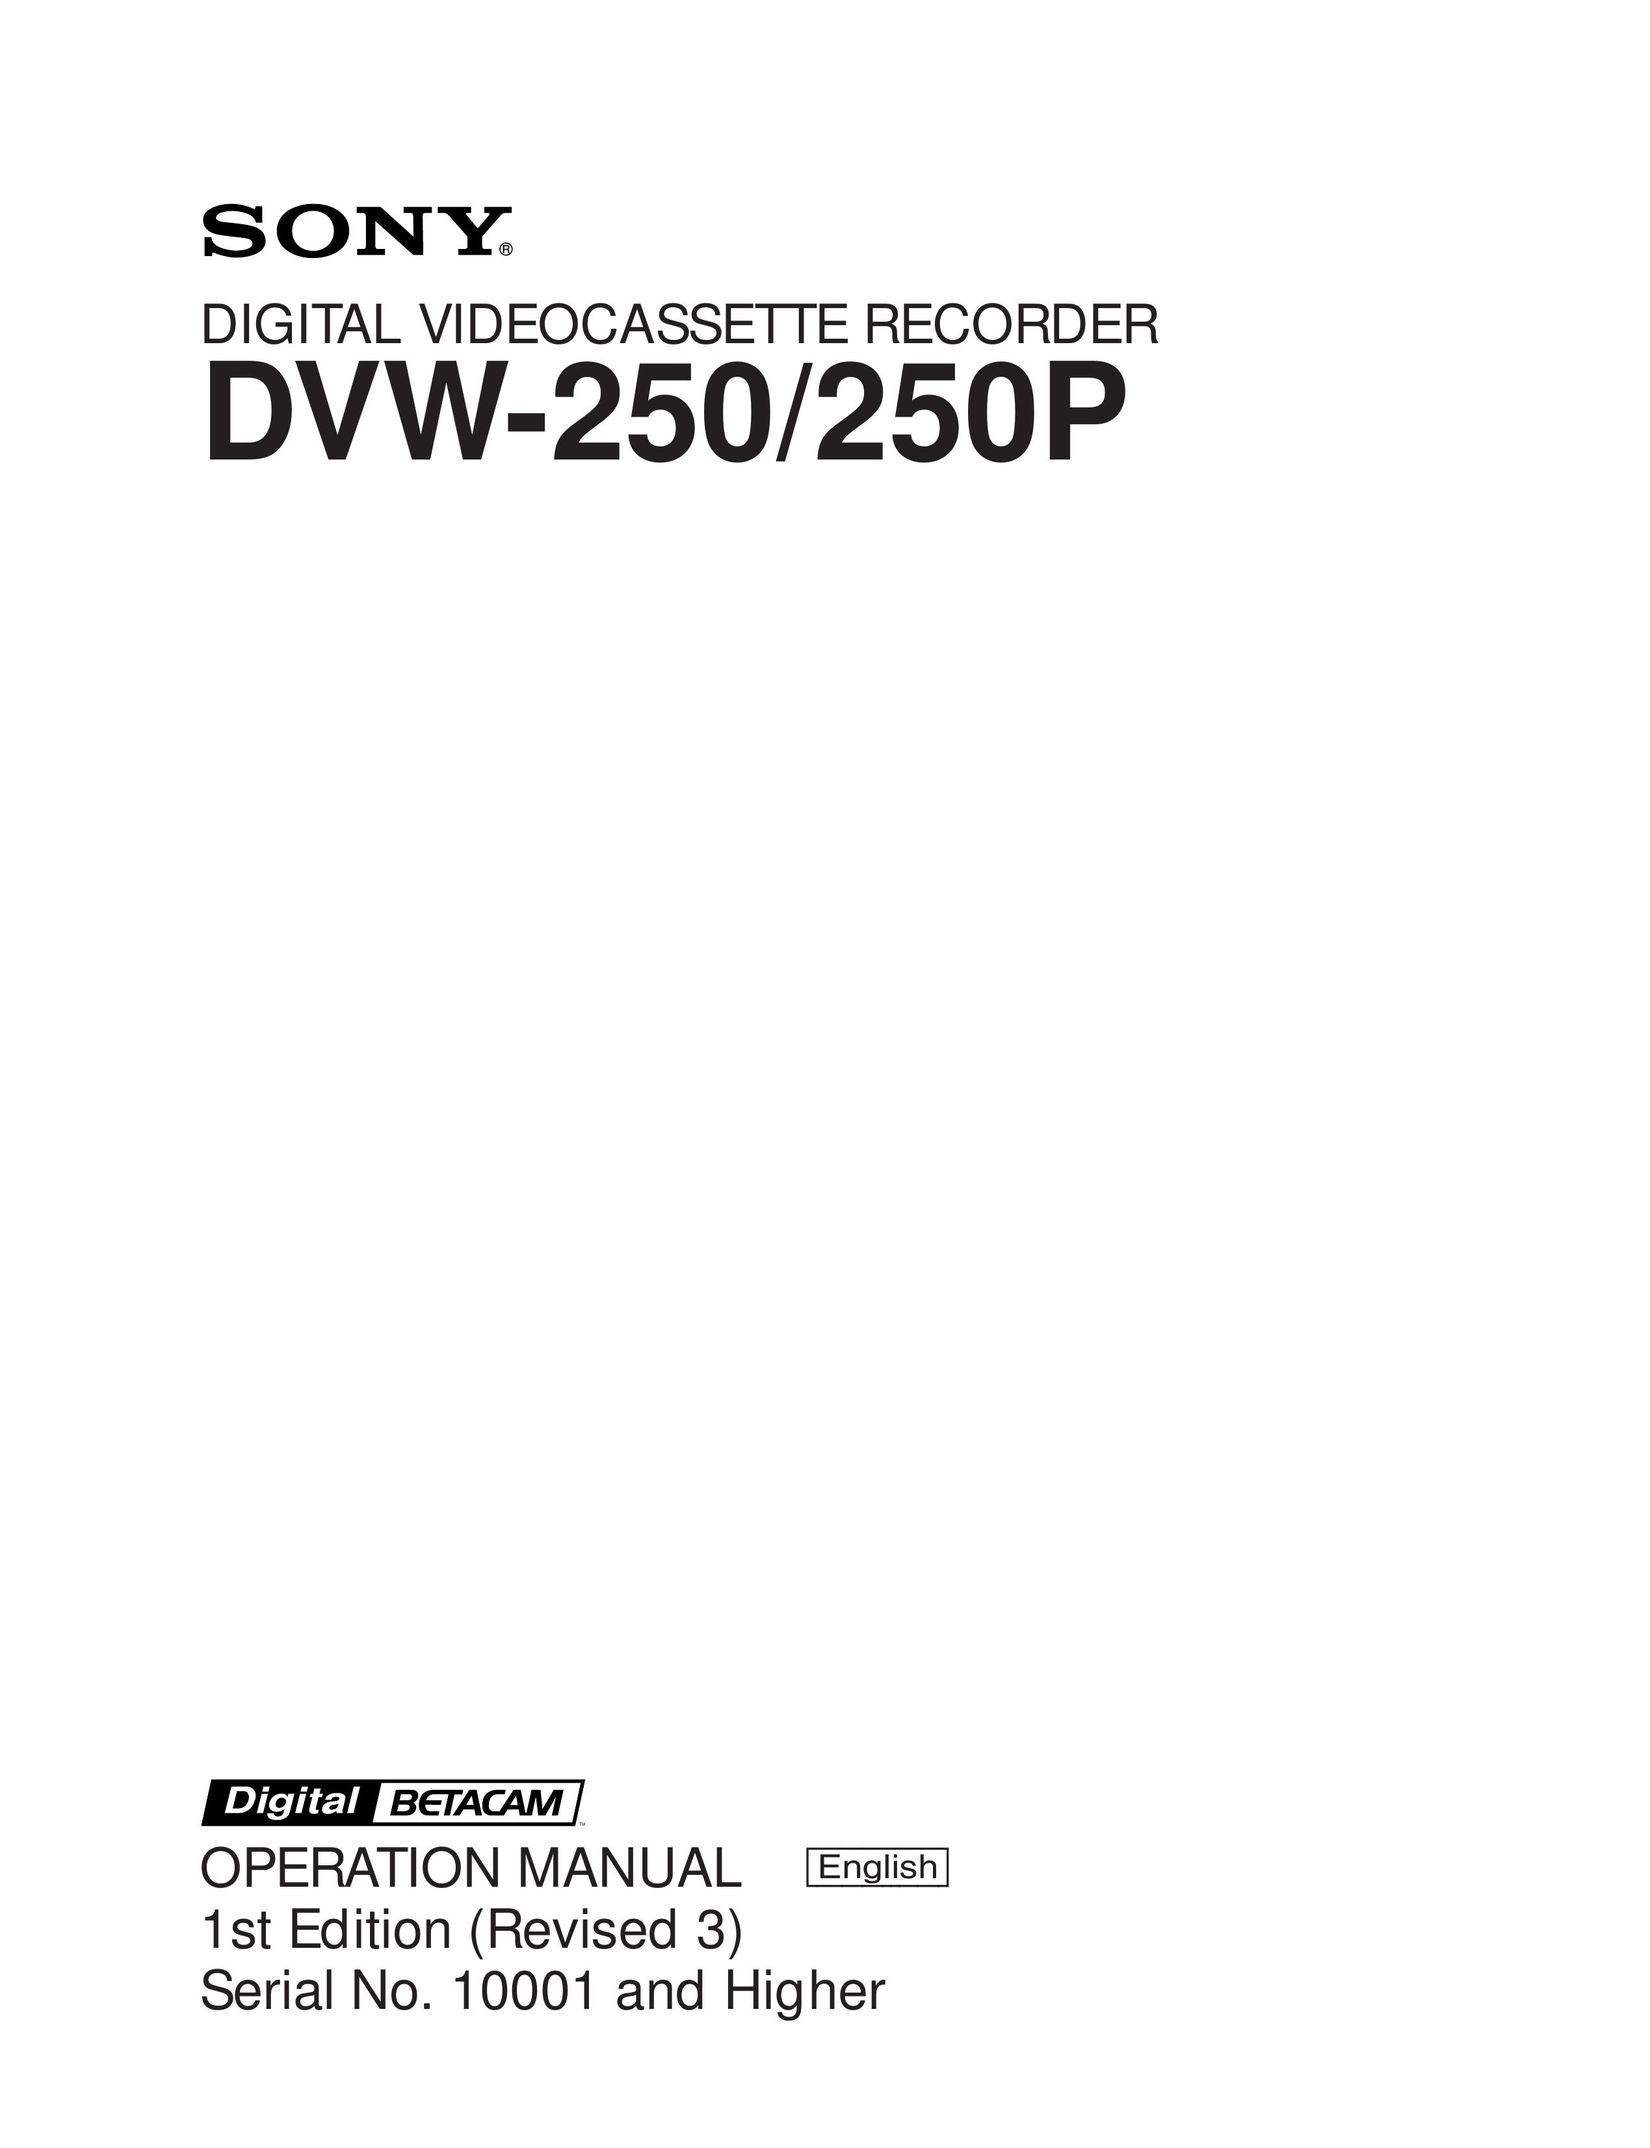 Sony DVW-250P VCR User Manual